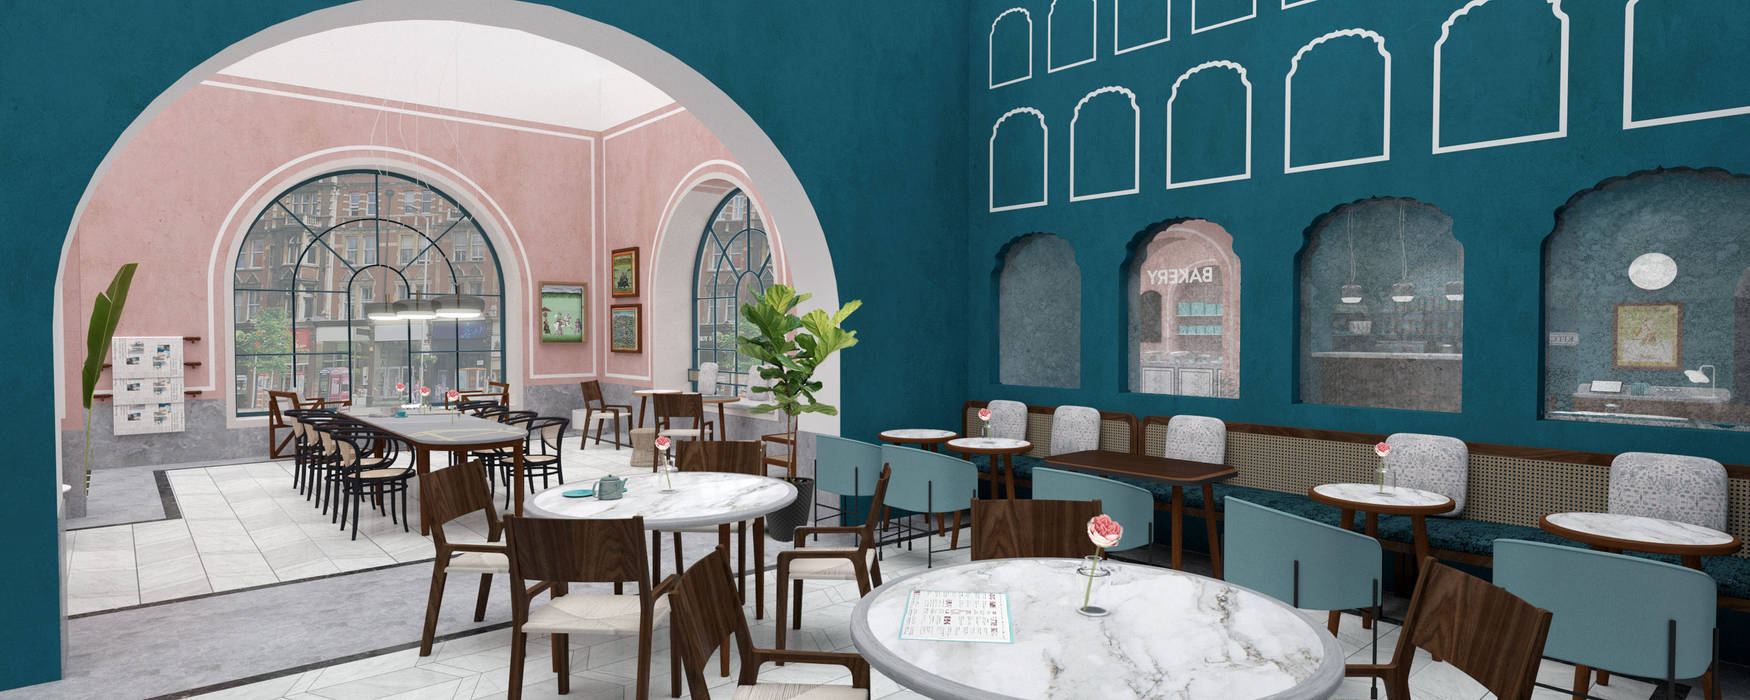 Pistachio Rose - Bakery & Cafe - Seating Area Lunar Lunar مساحات تجارية مطاعم